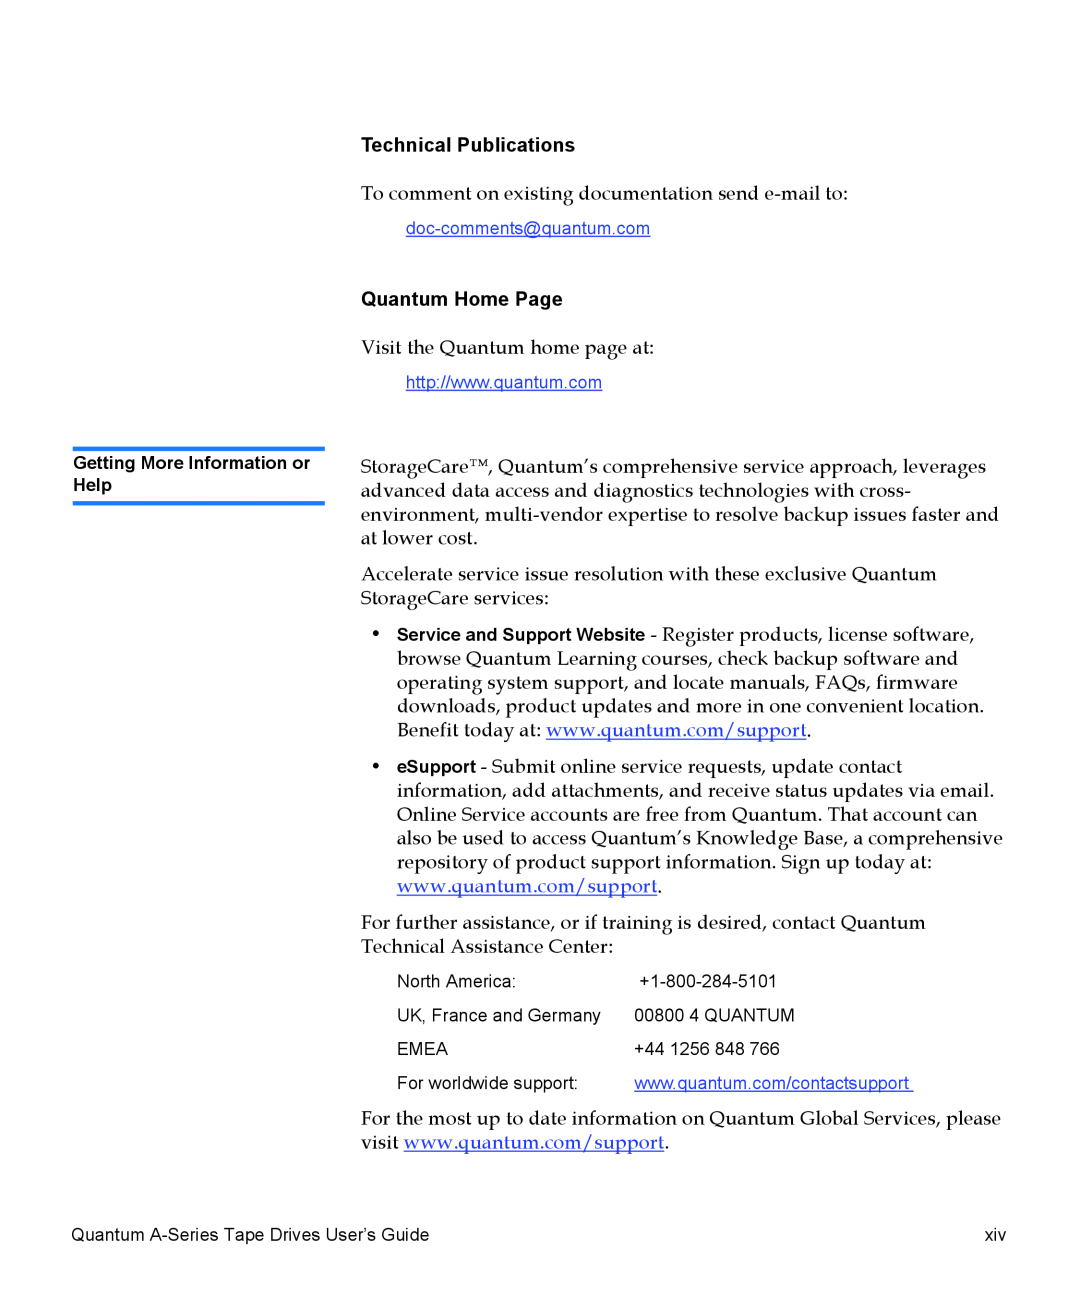 Quantum A-Series manual Technical Publications, Quantum Home Page 